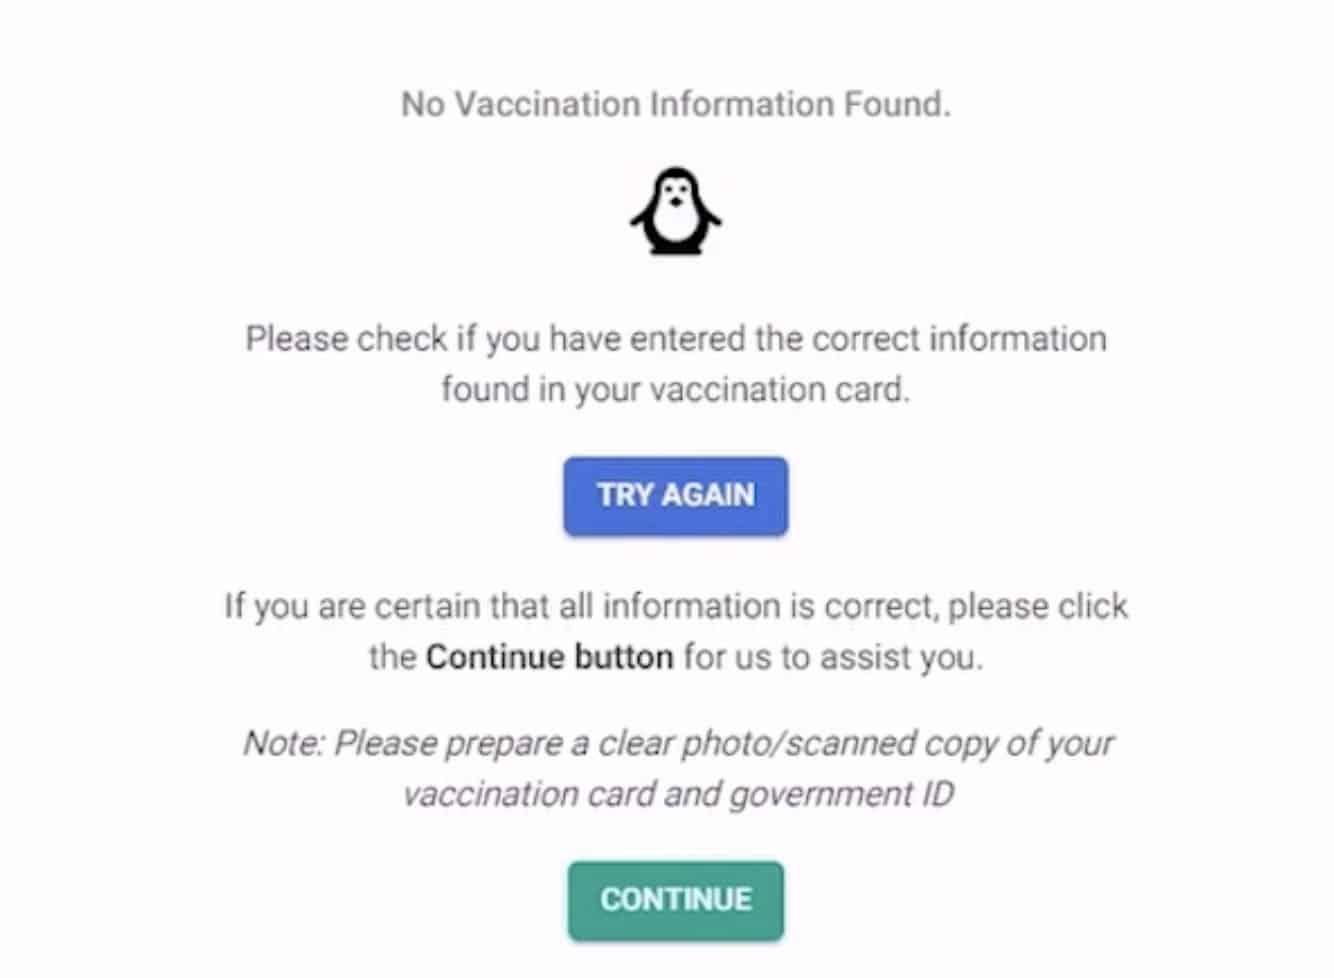 No Vaccination Information Found Error. What should I do?